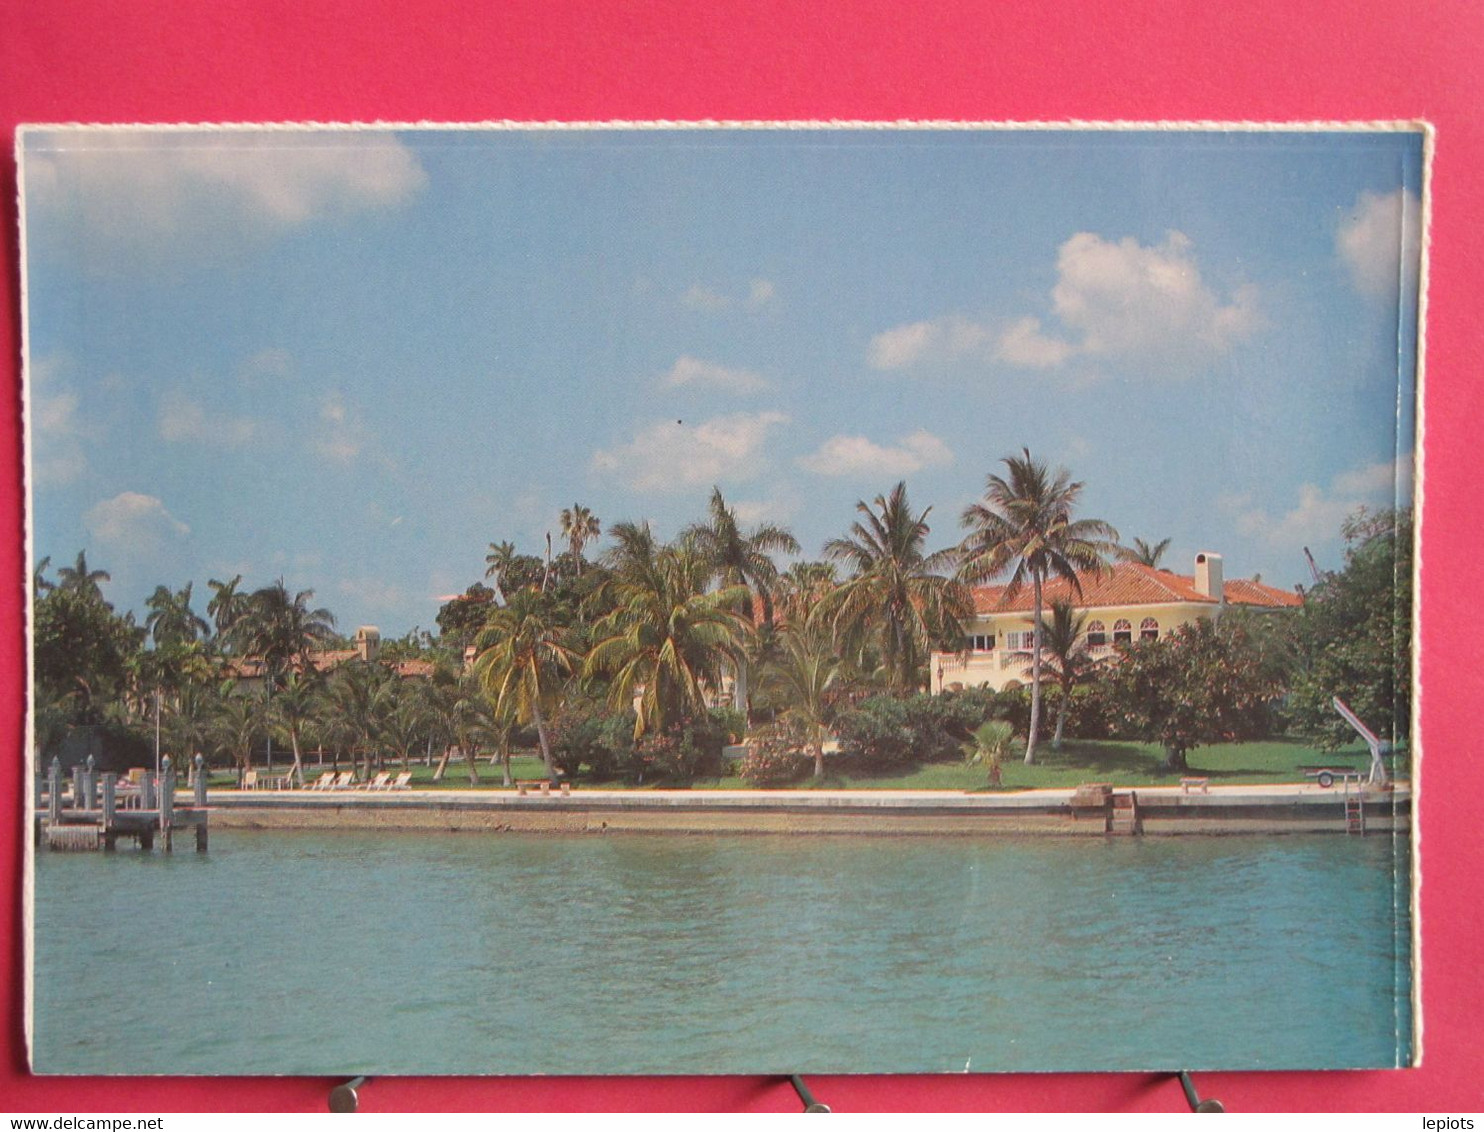 Visuel Très Peu Courant - Etats-Unis - Miami - Fabulous Star Island Home On The Intercoastal Waterway - R/verso - Miami